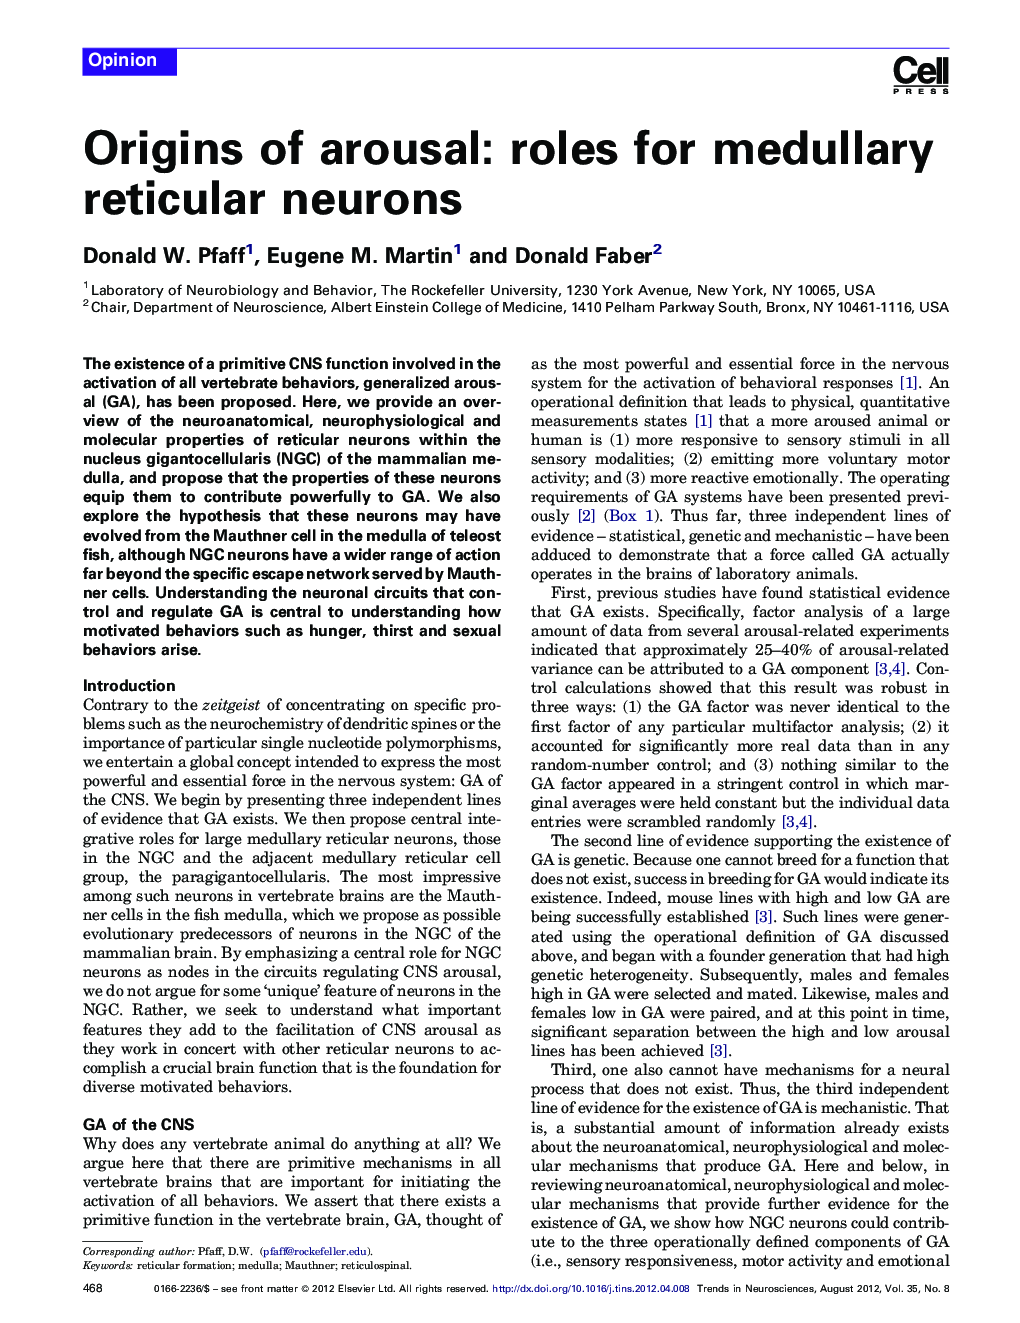 Origins of arousal: roles for medullary reticular neurons